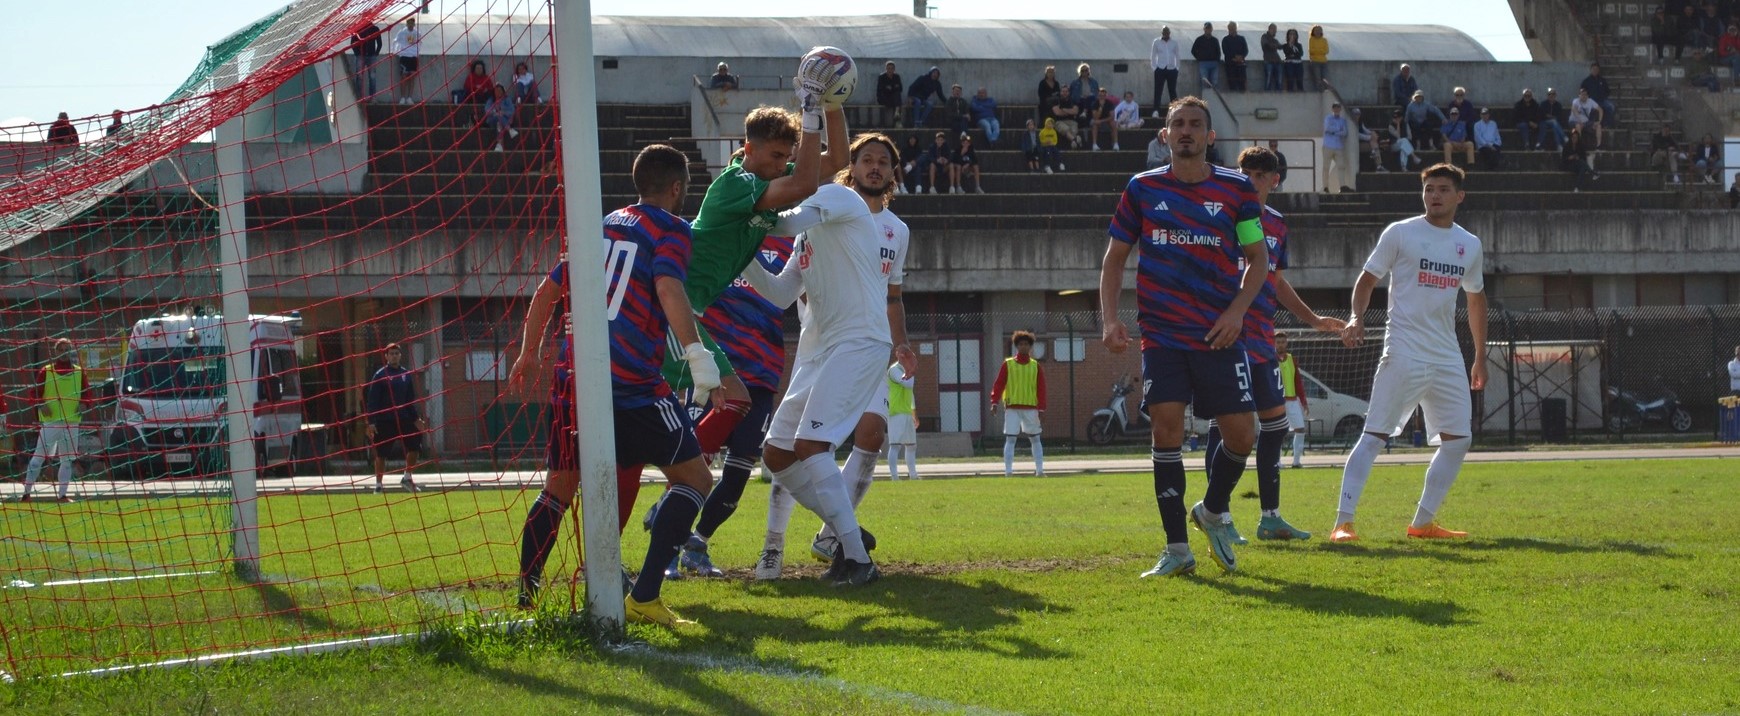 Orvietana-Follonica Gavorrano 0-0